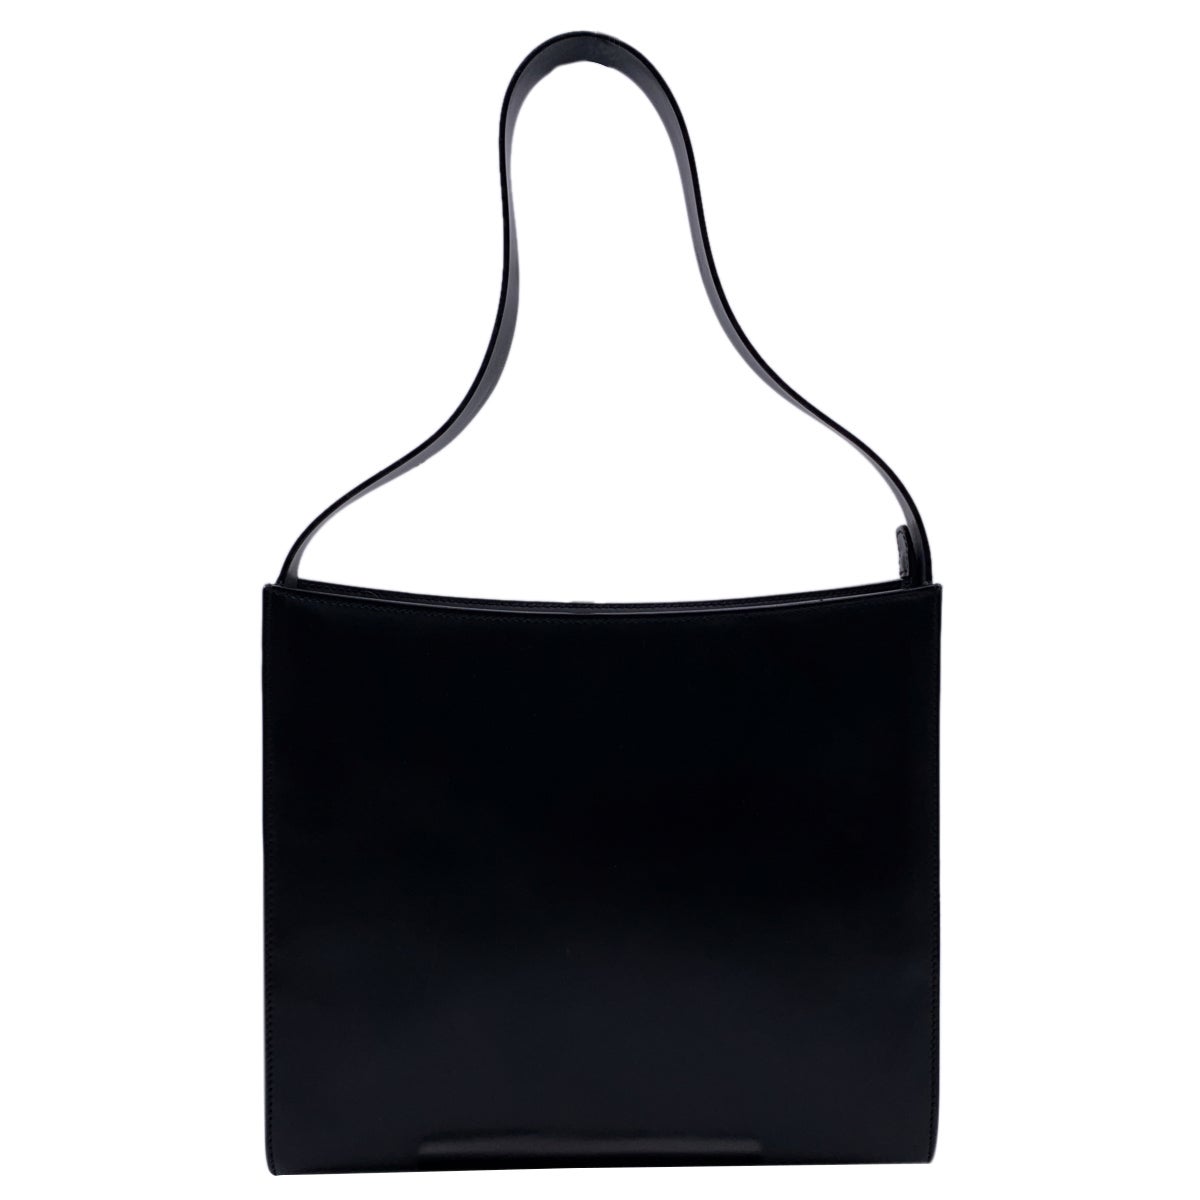 Gucci Black Smooth Leather Squared Tote Shoulder Bag